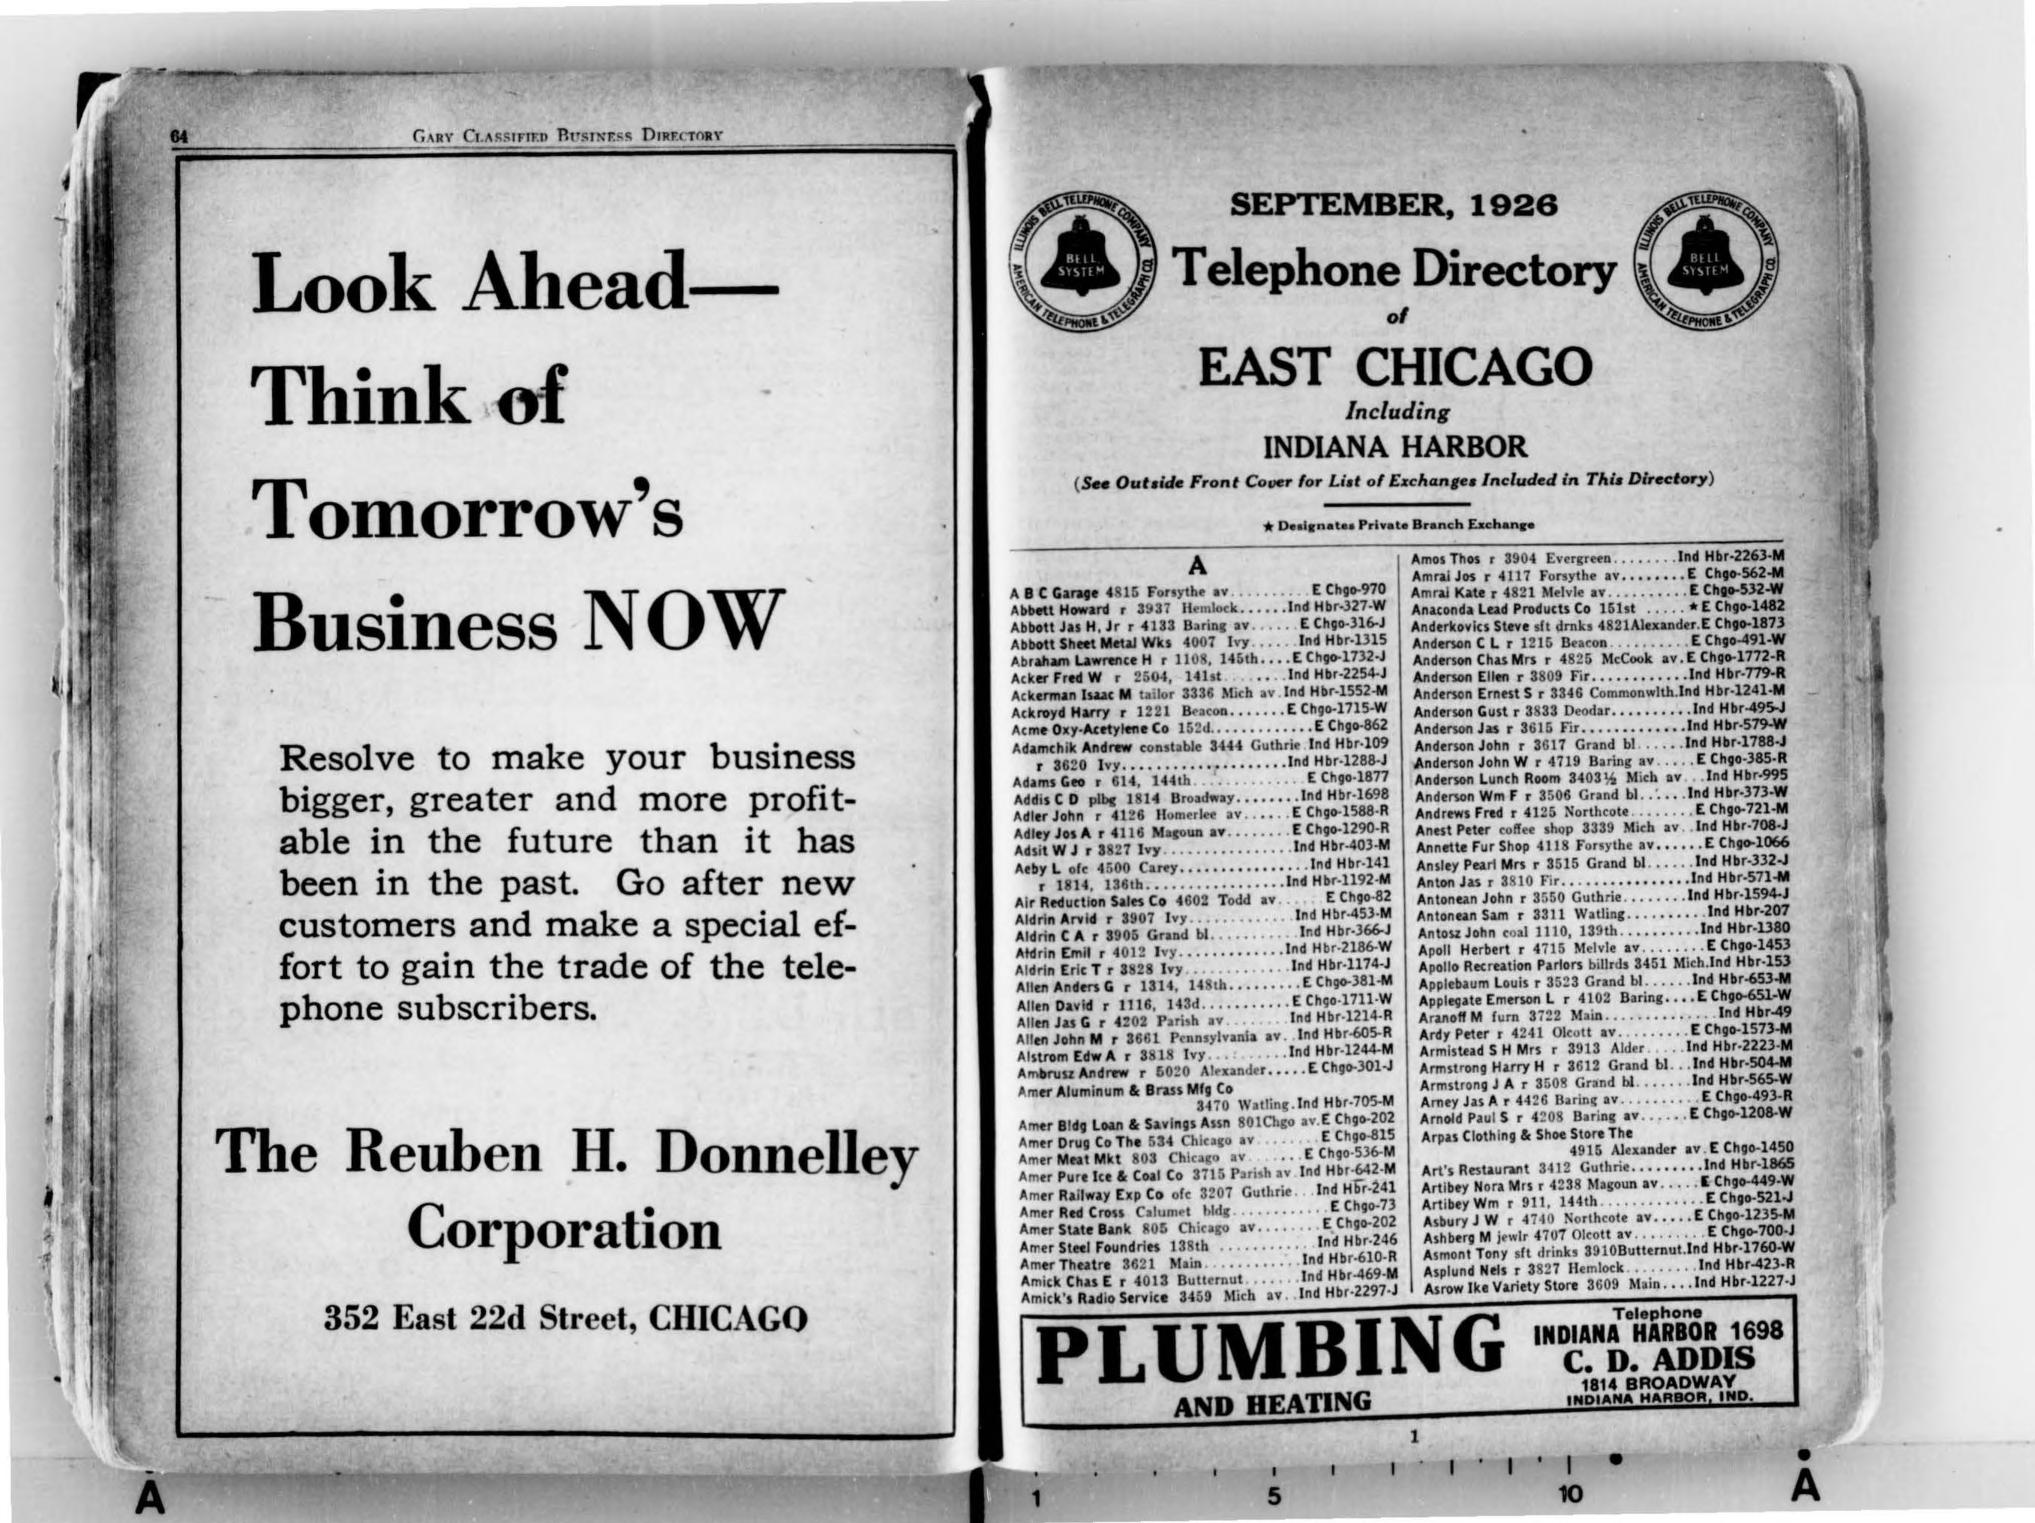 East Chicago Directory - September 1926 : Illinois Bell Telephone 